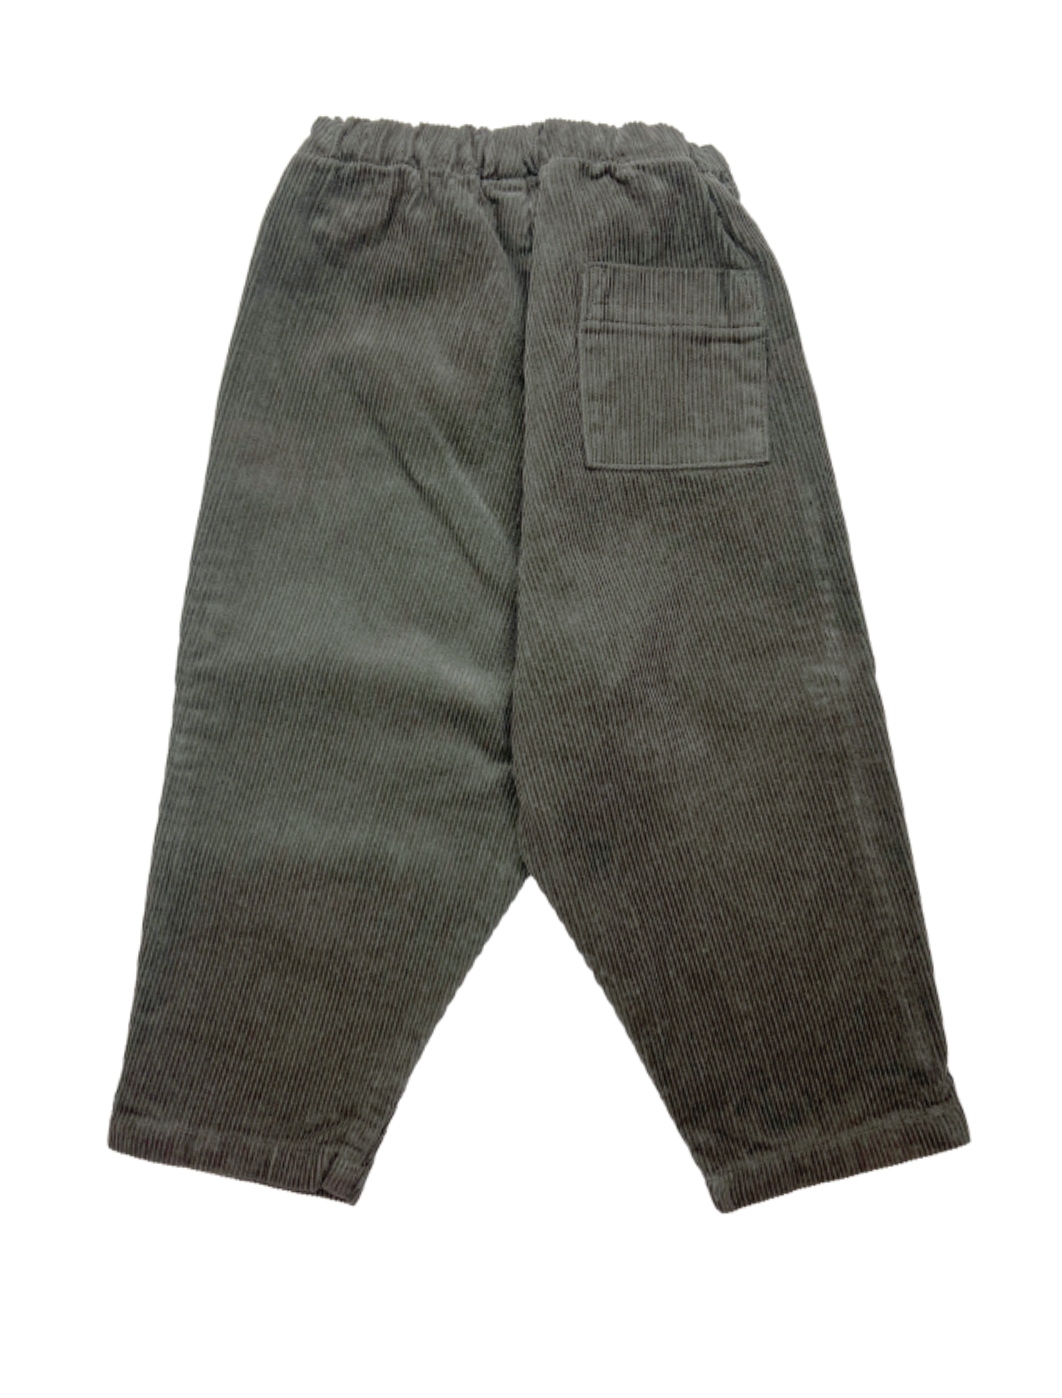 BONTON - Pantalon en velours côtelé kaki - 12 mois